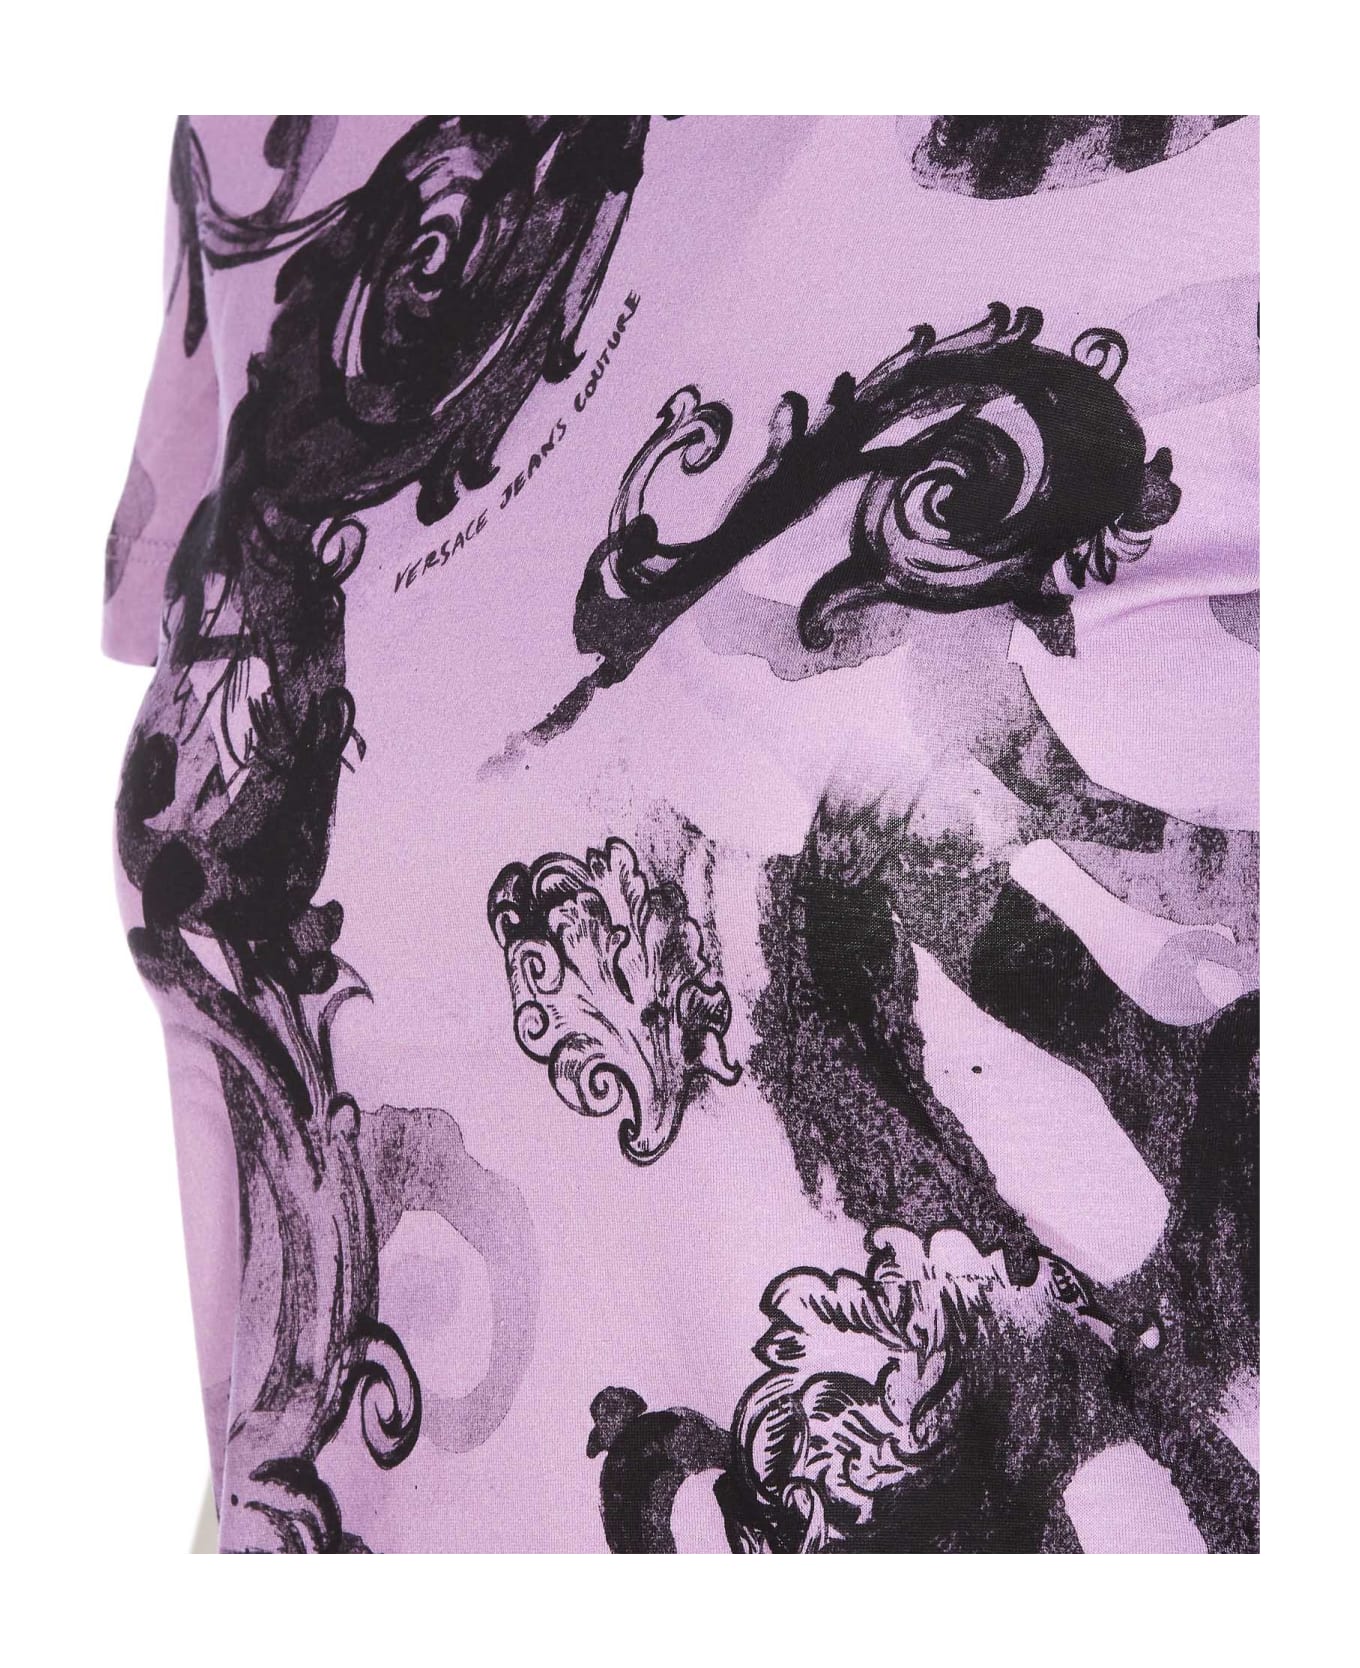 Versace Jeans Couture Watercolour Couture T-shirt - Purple